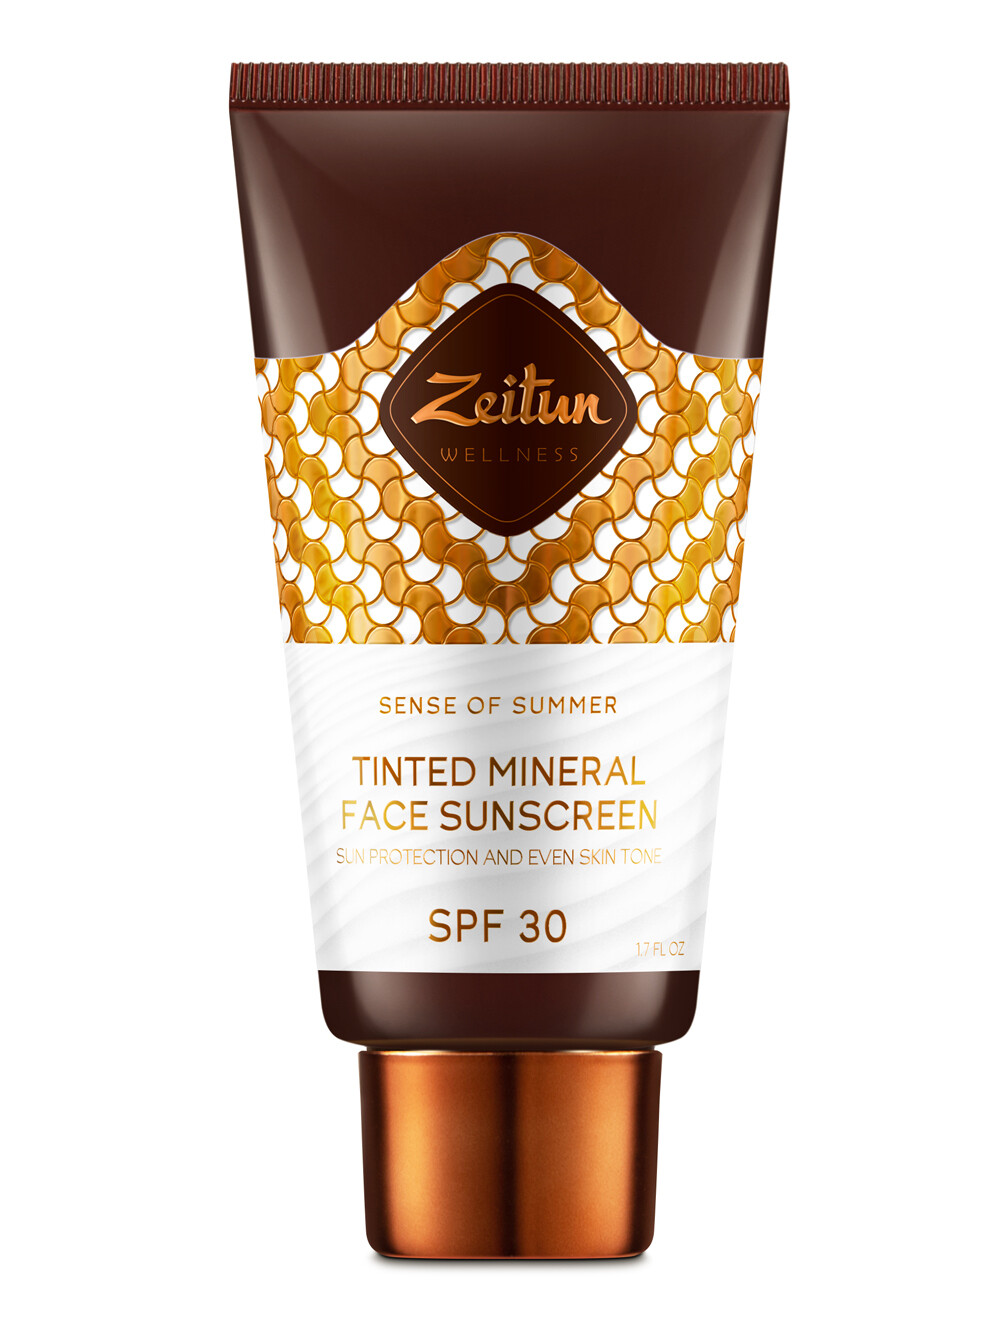 Zeitun Tinted Mineral Face Sunscreen Солнцезащитный крем для лица "Ритуал Солнца"SPF30